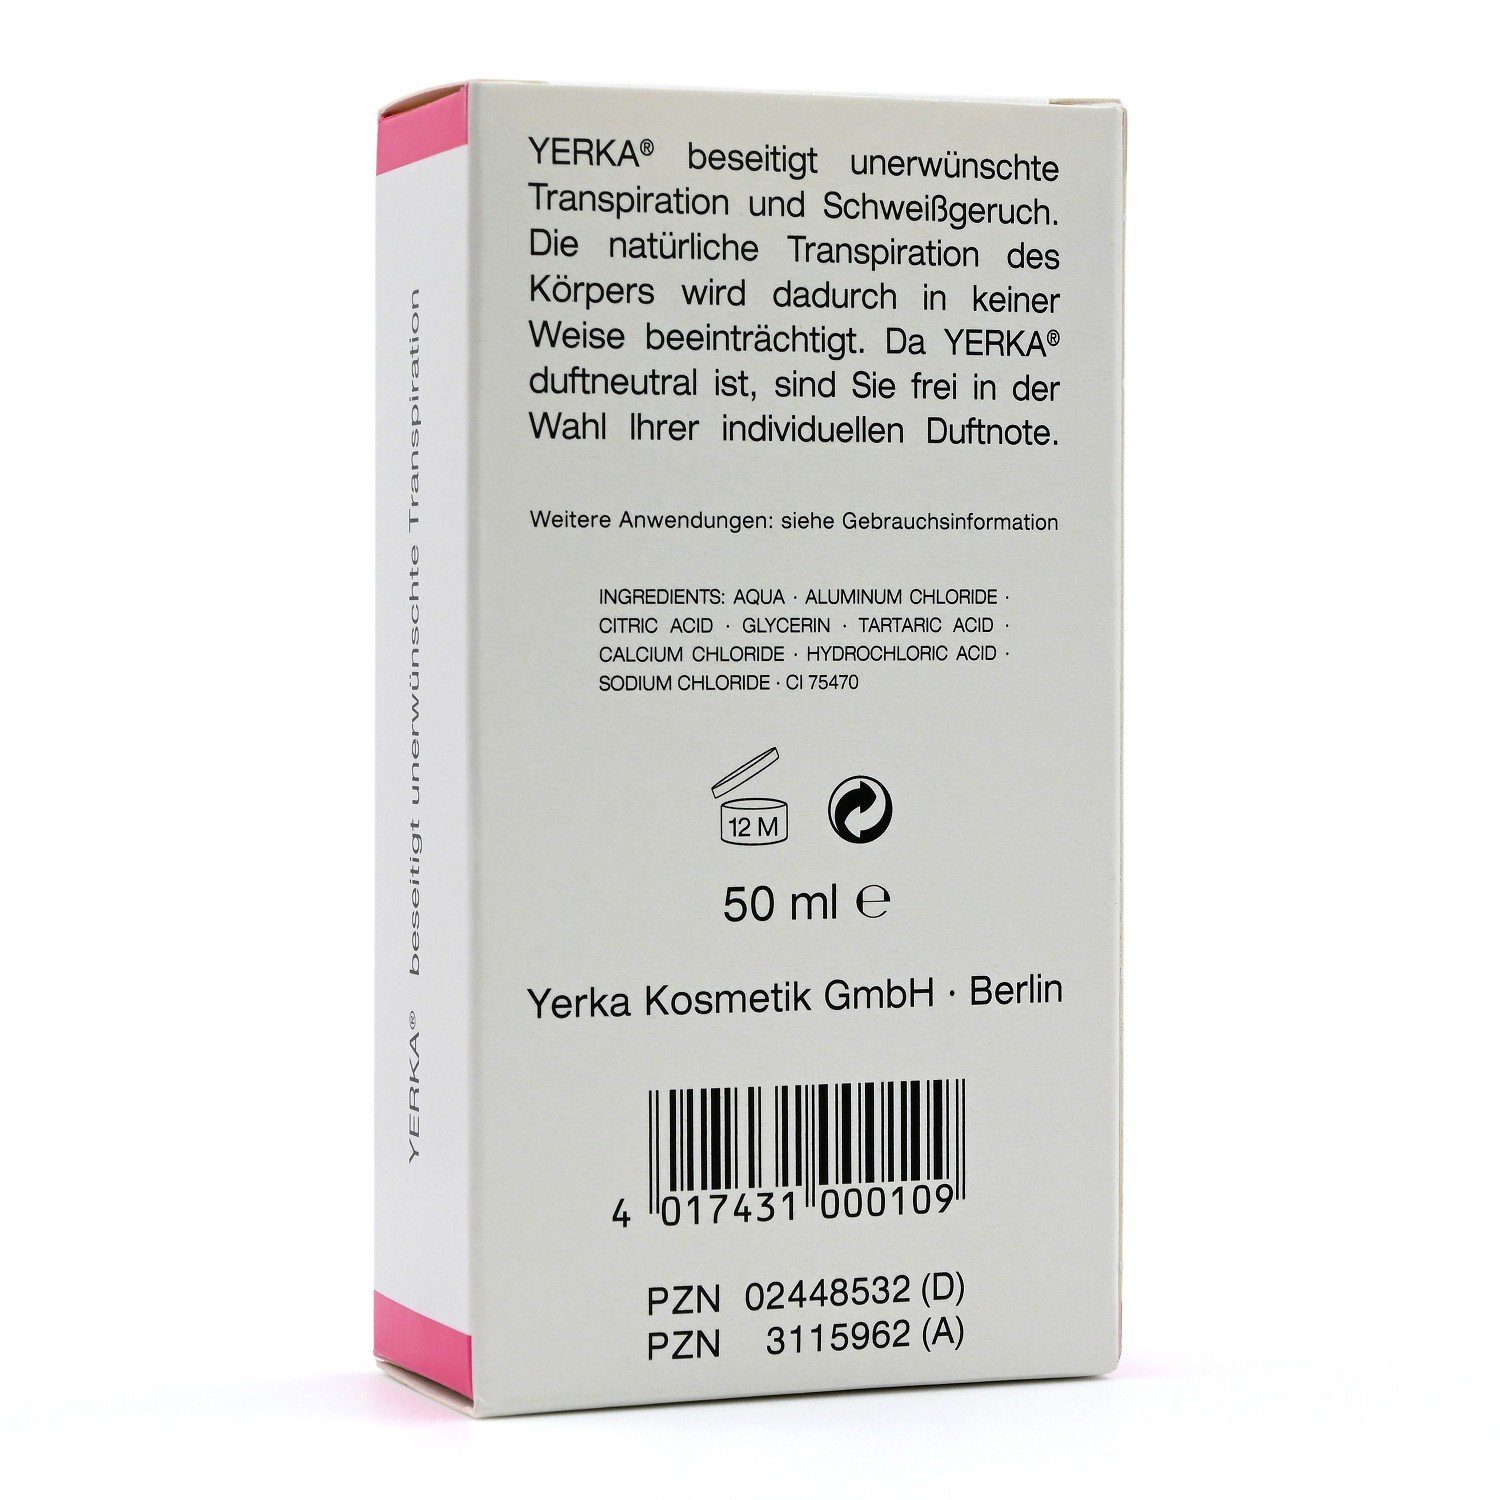 YERKA Deodorant Antitranspirant, YERKA Kosmetik Transpirant Deo-Pumpspray ml, GmbH 50